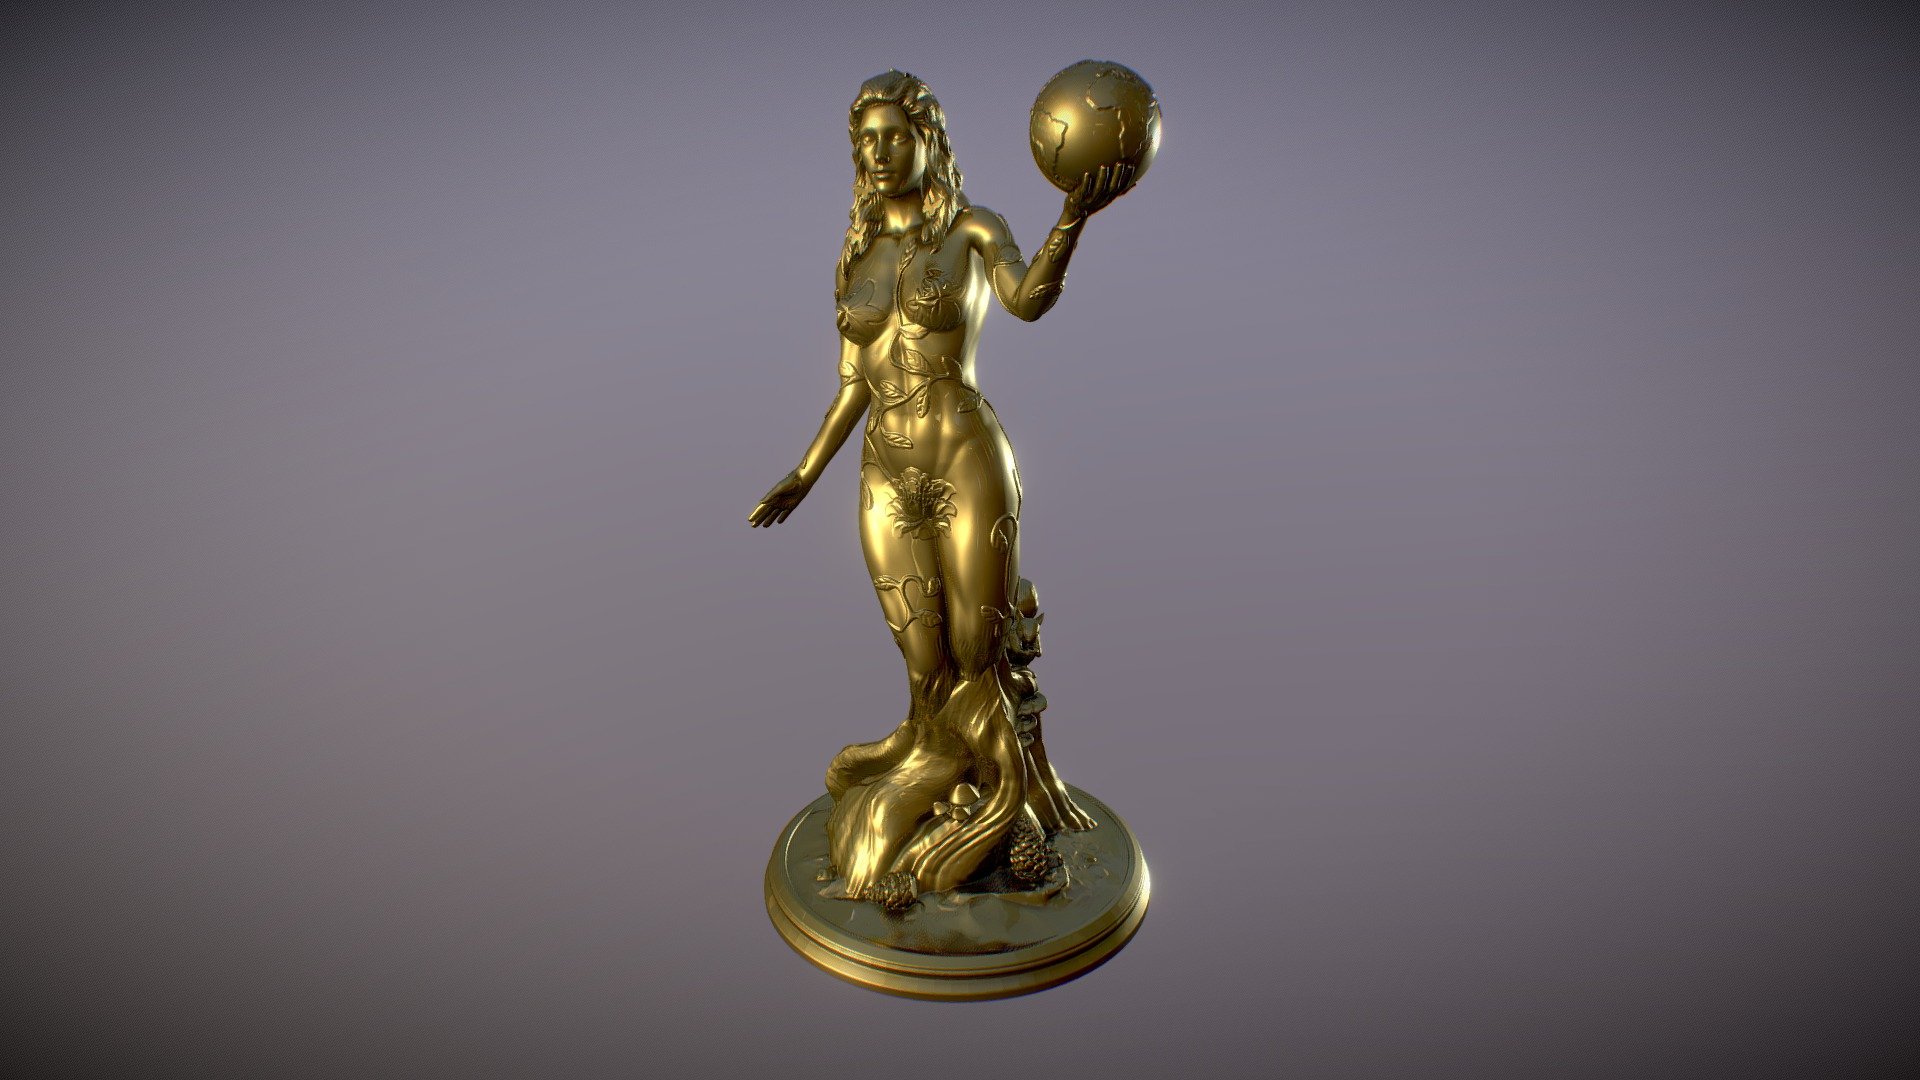 Earth Gaia Statue Greek Myth Legend Goddess Titan Figurine Bronzelike Statue.
3D model for 3D Print and paint - Earth Gaia Statue Greek Myth  Goddess - Buy Royalty Free 3D model by abauerenator 3d model